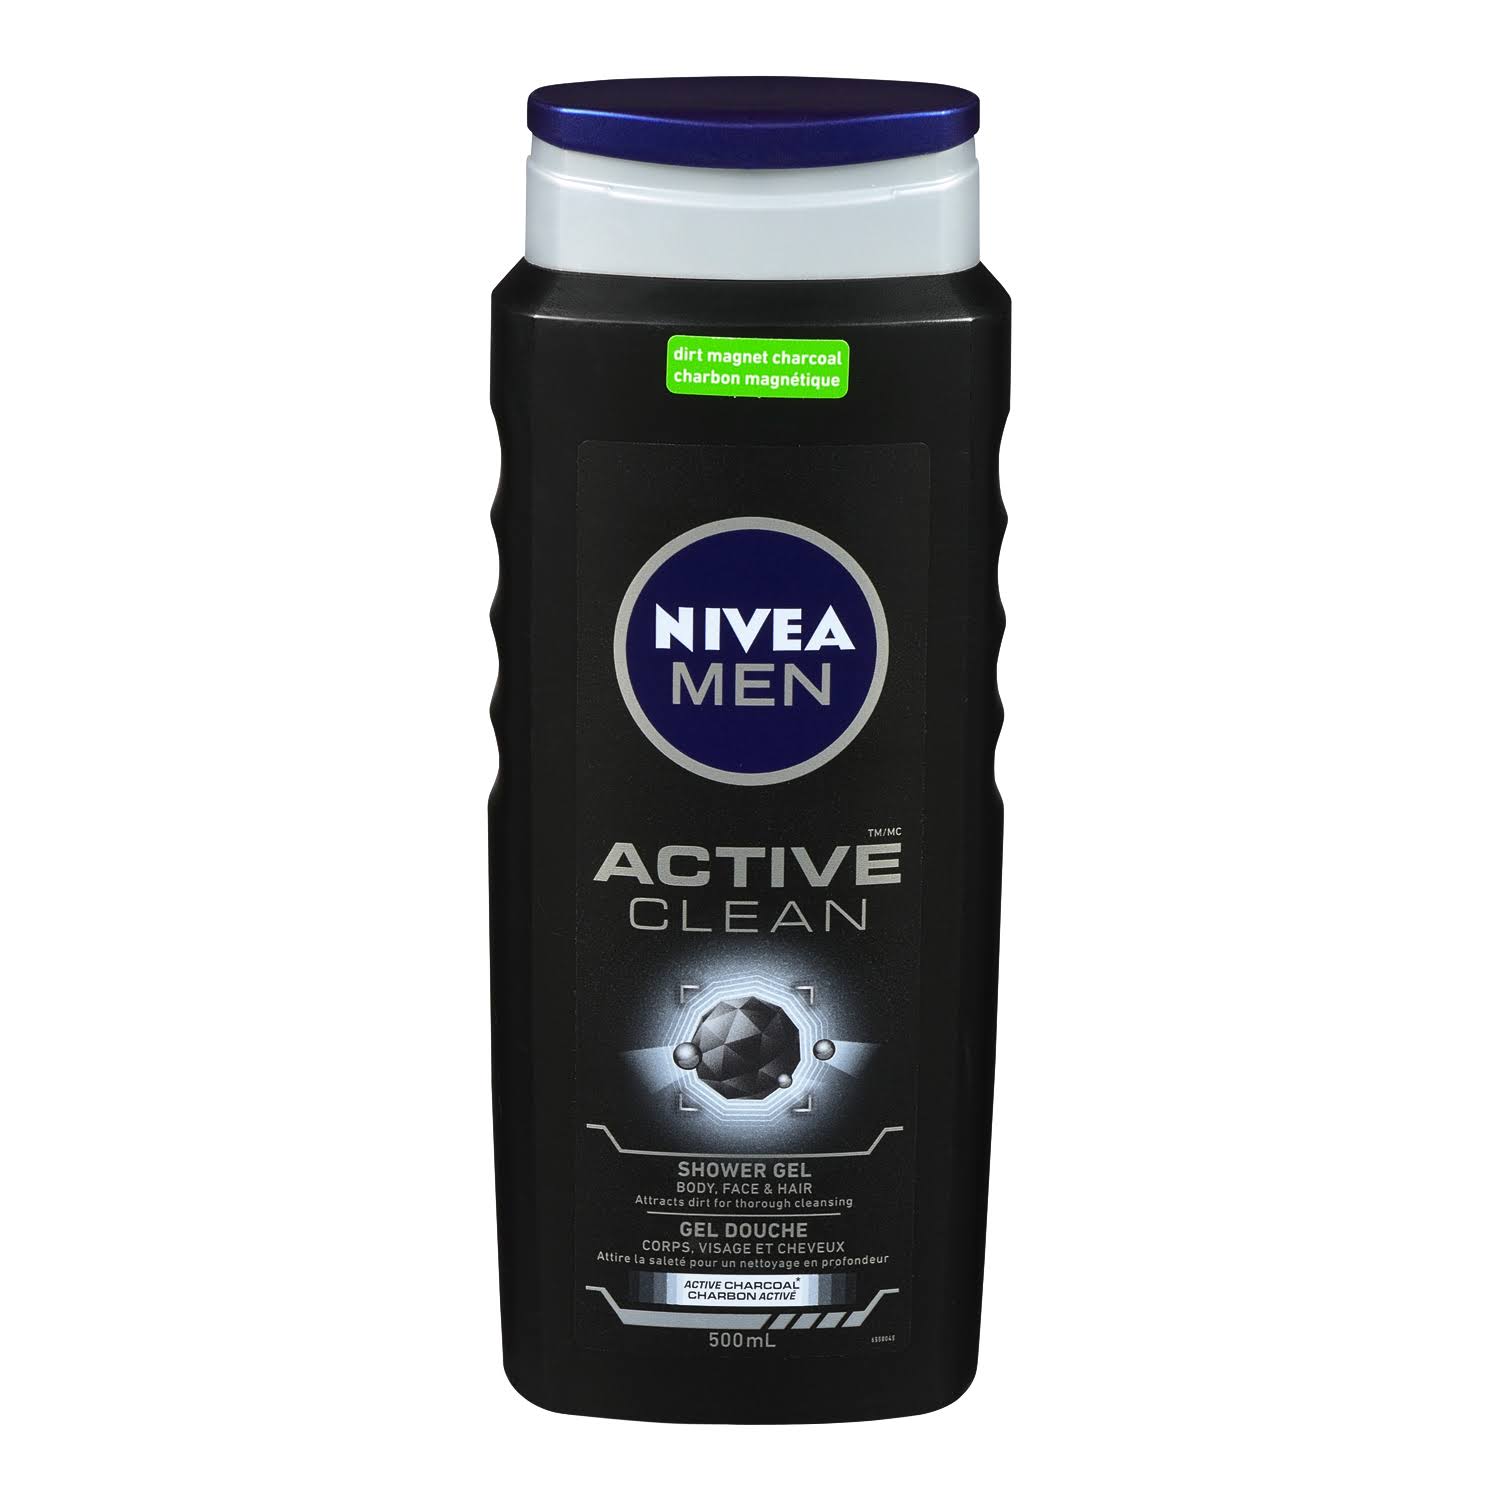 Nivea Men Active Clean Shower Gel - 500ml